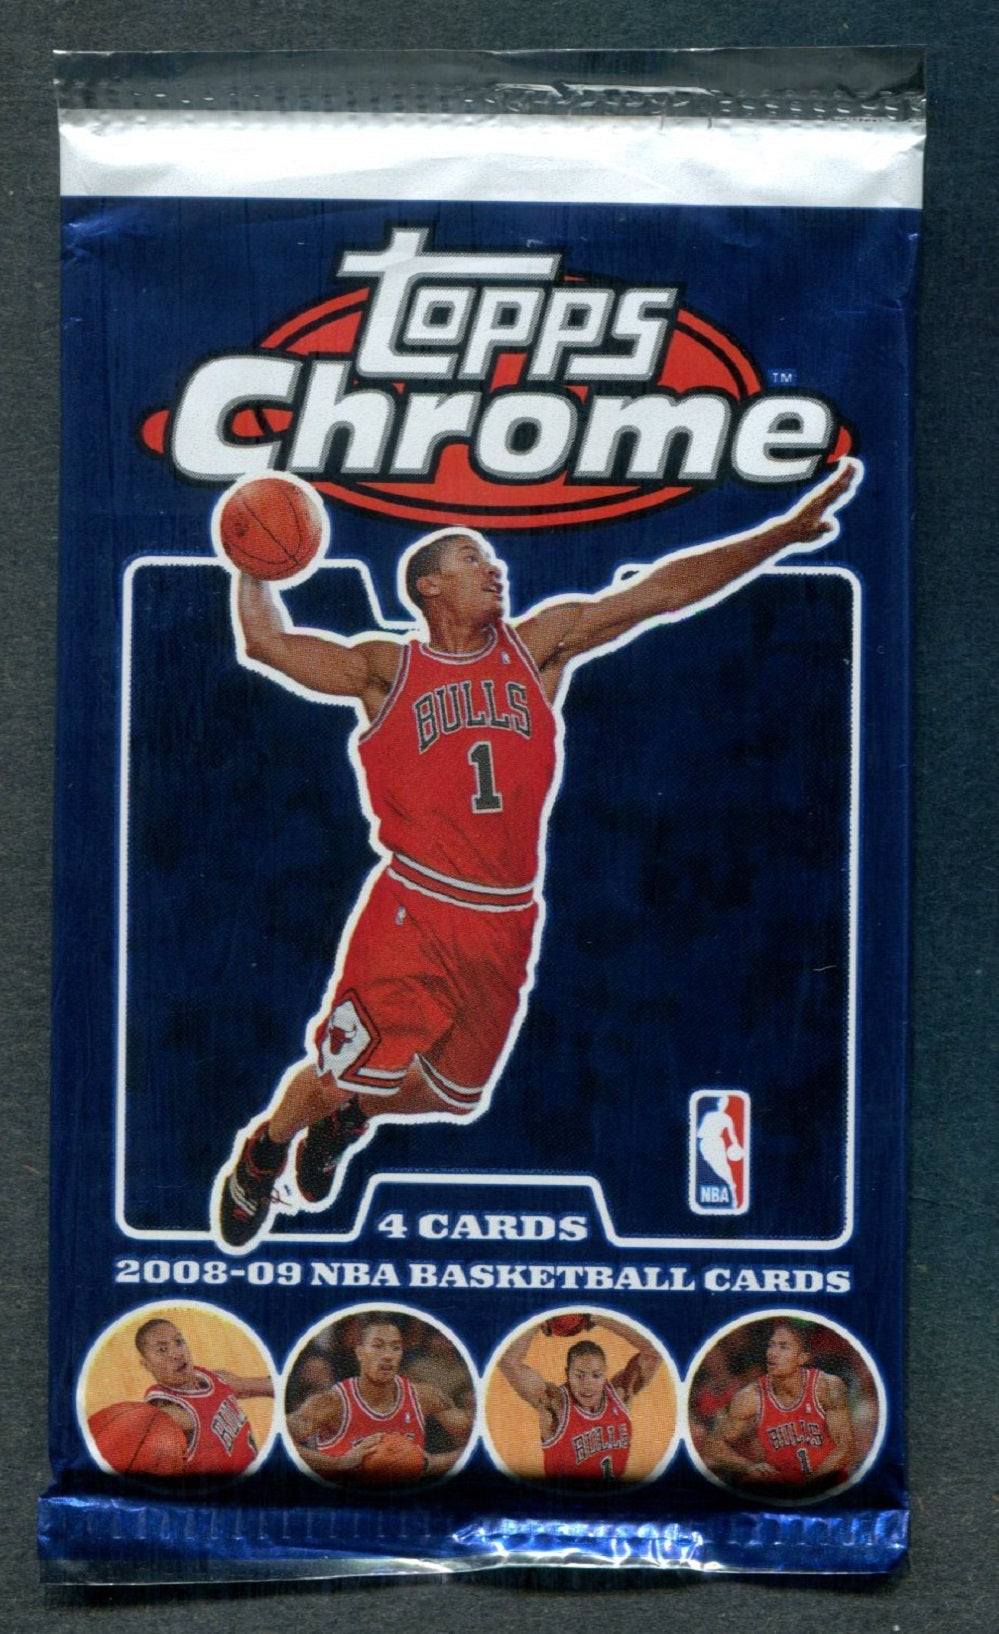 2008/09 Topps Chrome Basketball Unopened Pack (Retail)